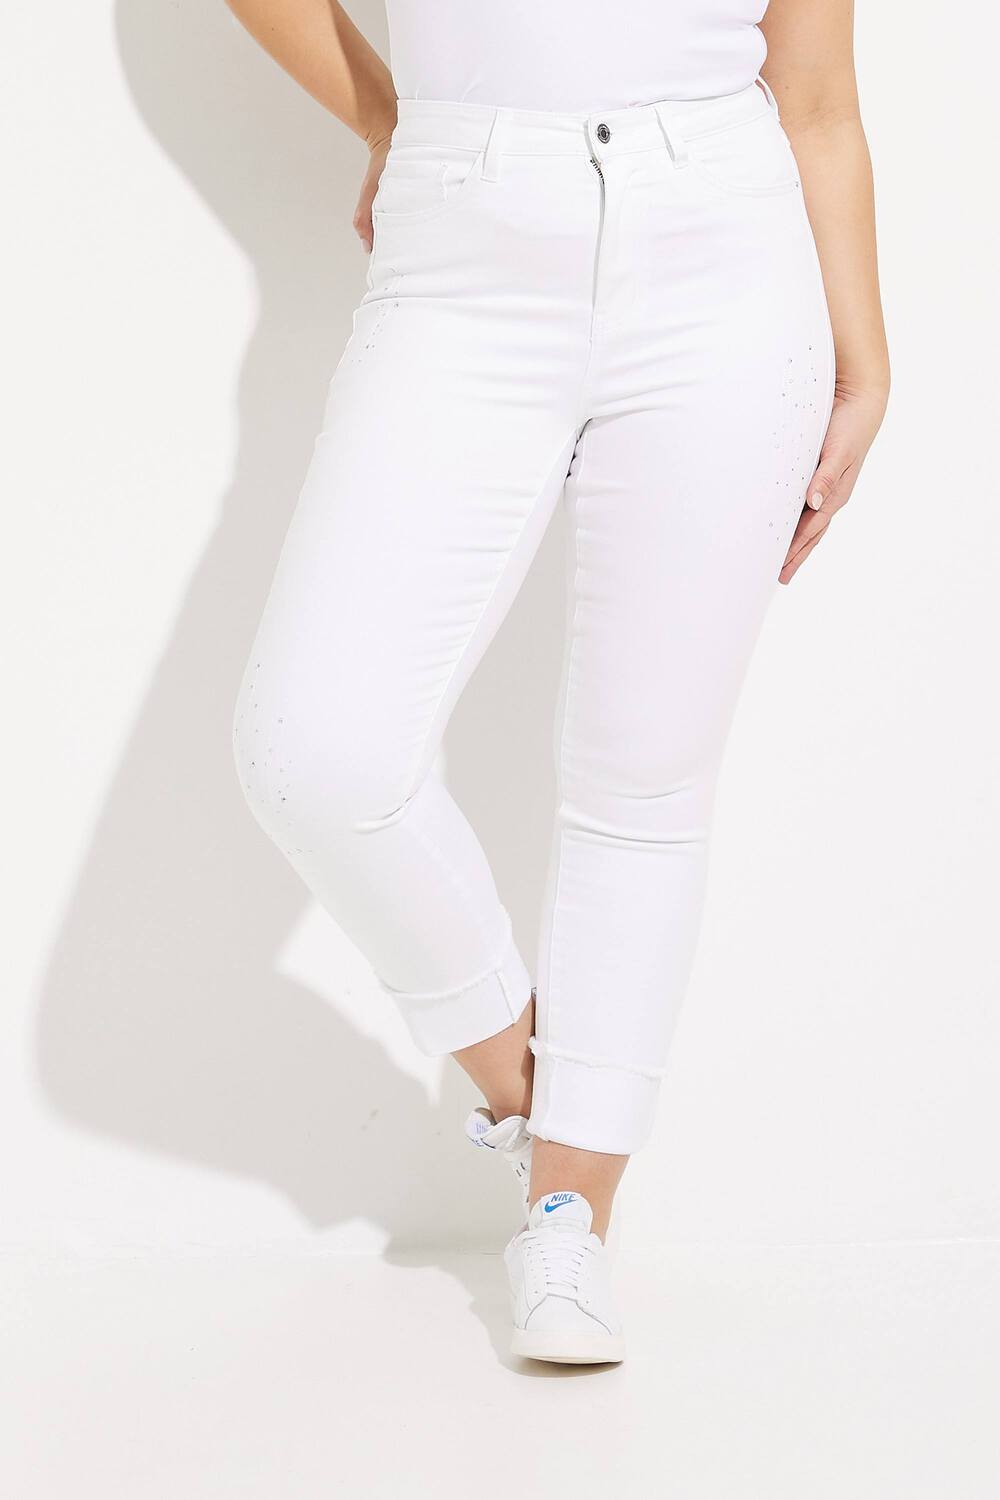 Embellished Detail Pants Style 232905. White